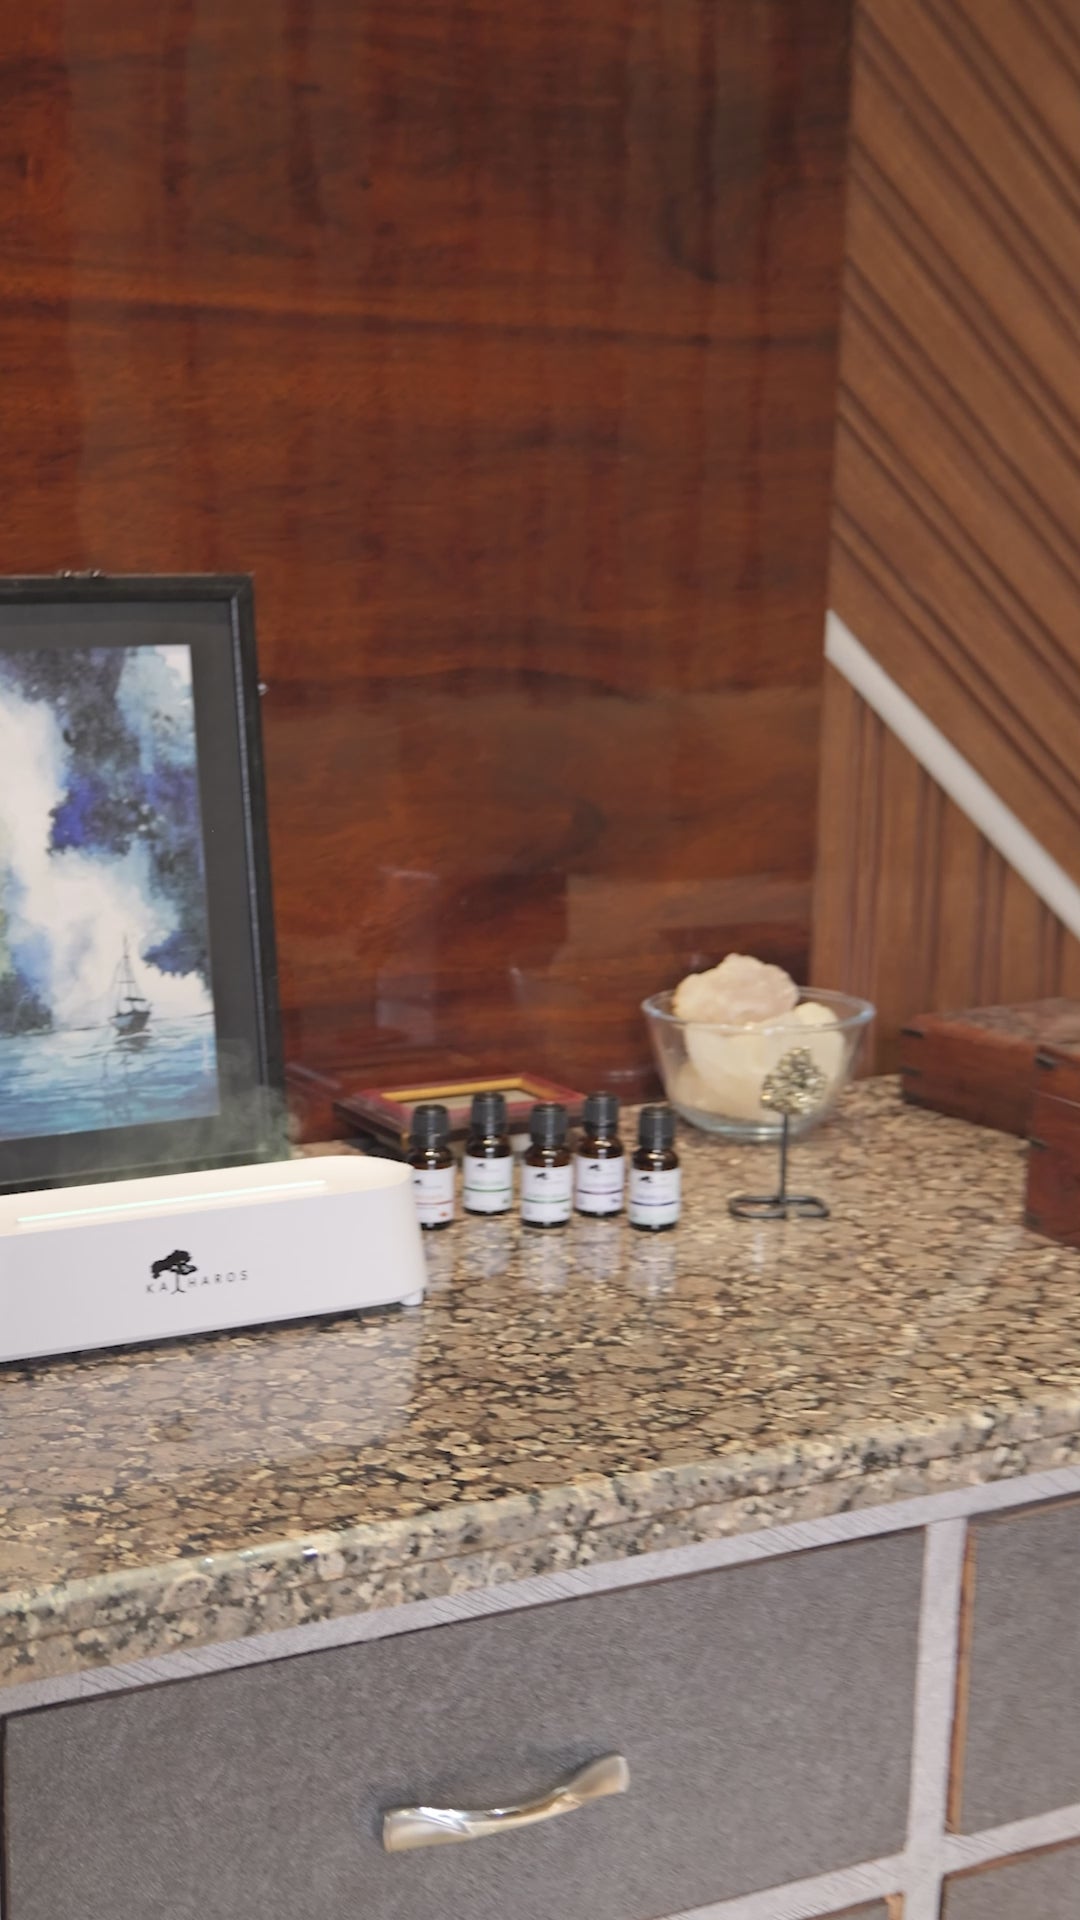 Katharos Flames Aroma Sleek Humidifier with 2x Complimentary Fragrance Oils (15 mL each)